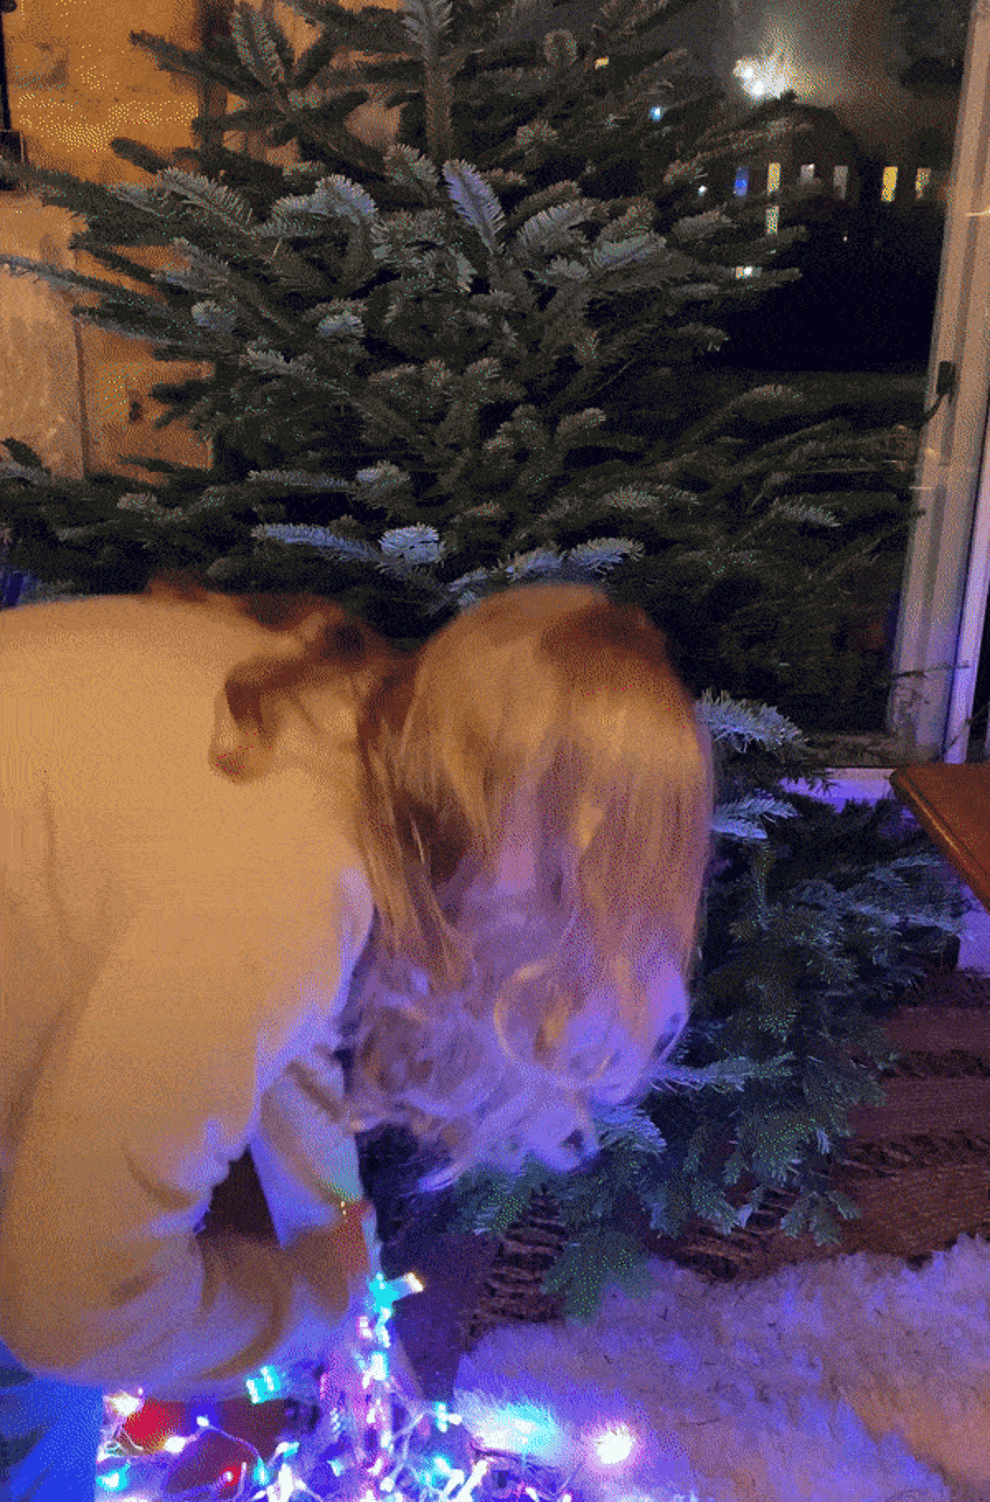 emma untangingling all the christmas lights